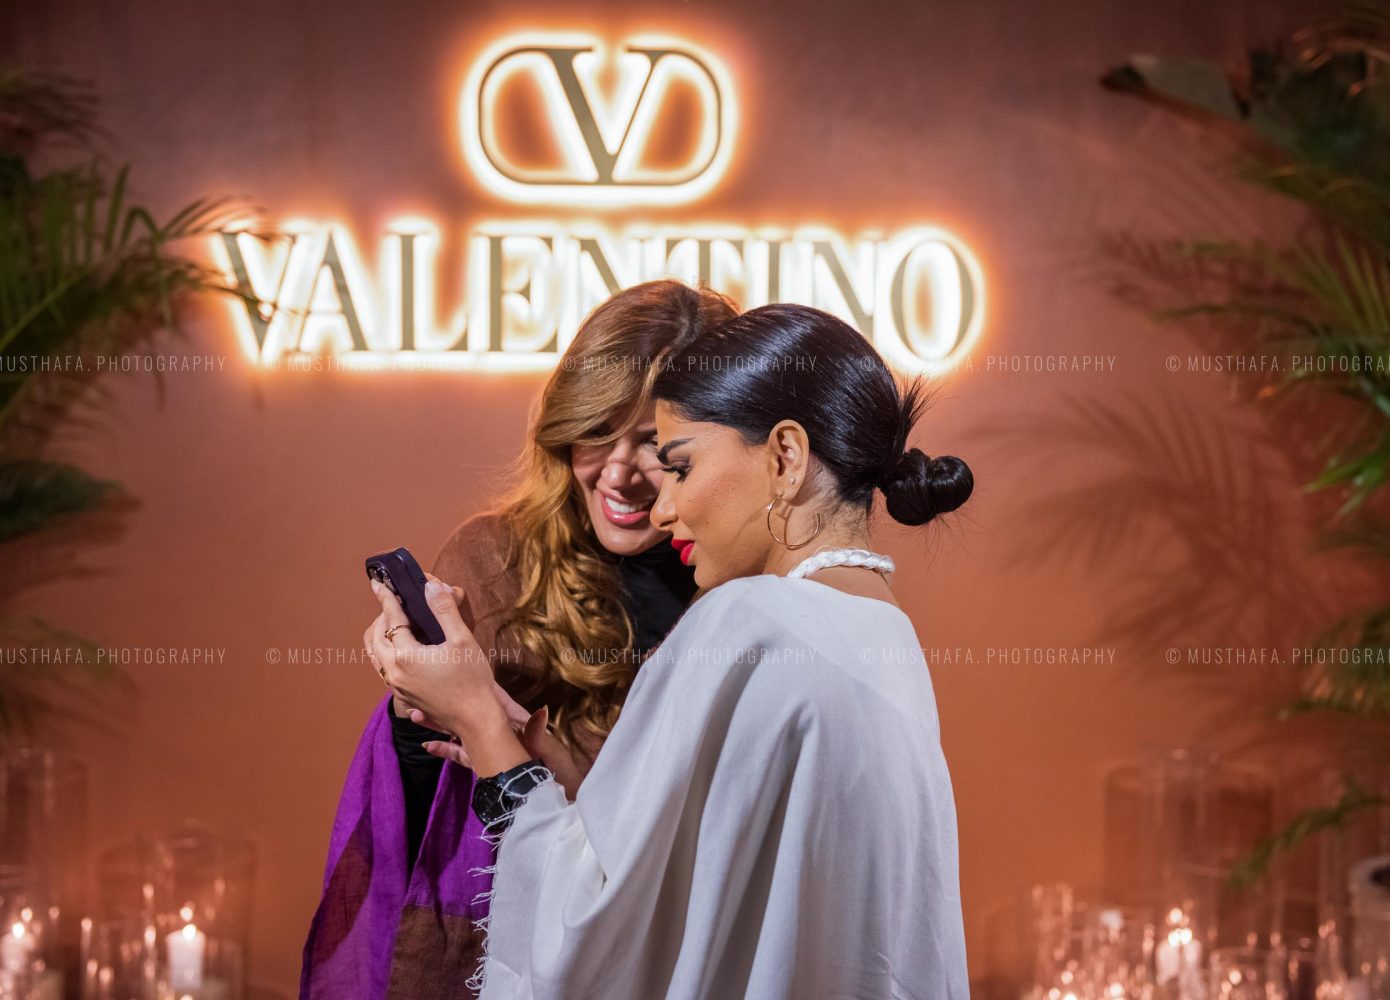 Maison Valentino Store Event Photography Kuwait City Dubai UAE Saudi Arabia KSA Qatar Bahrain Oman 10